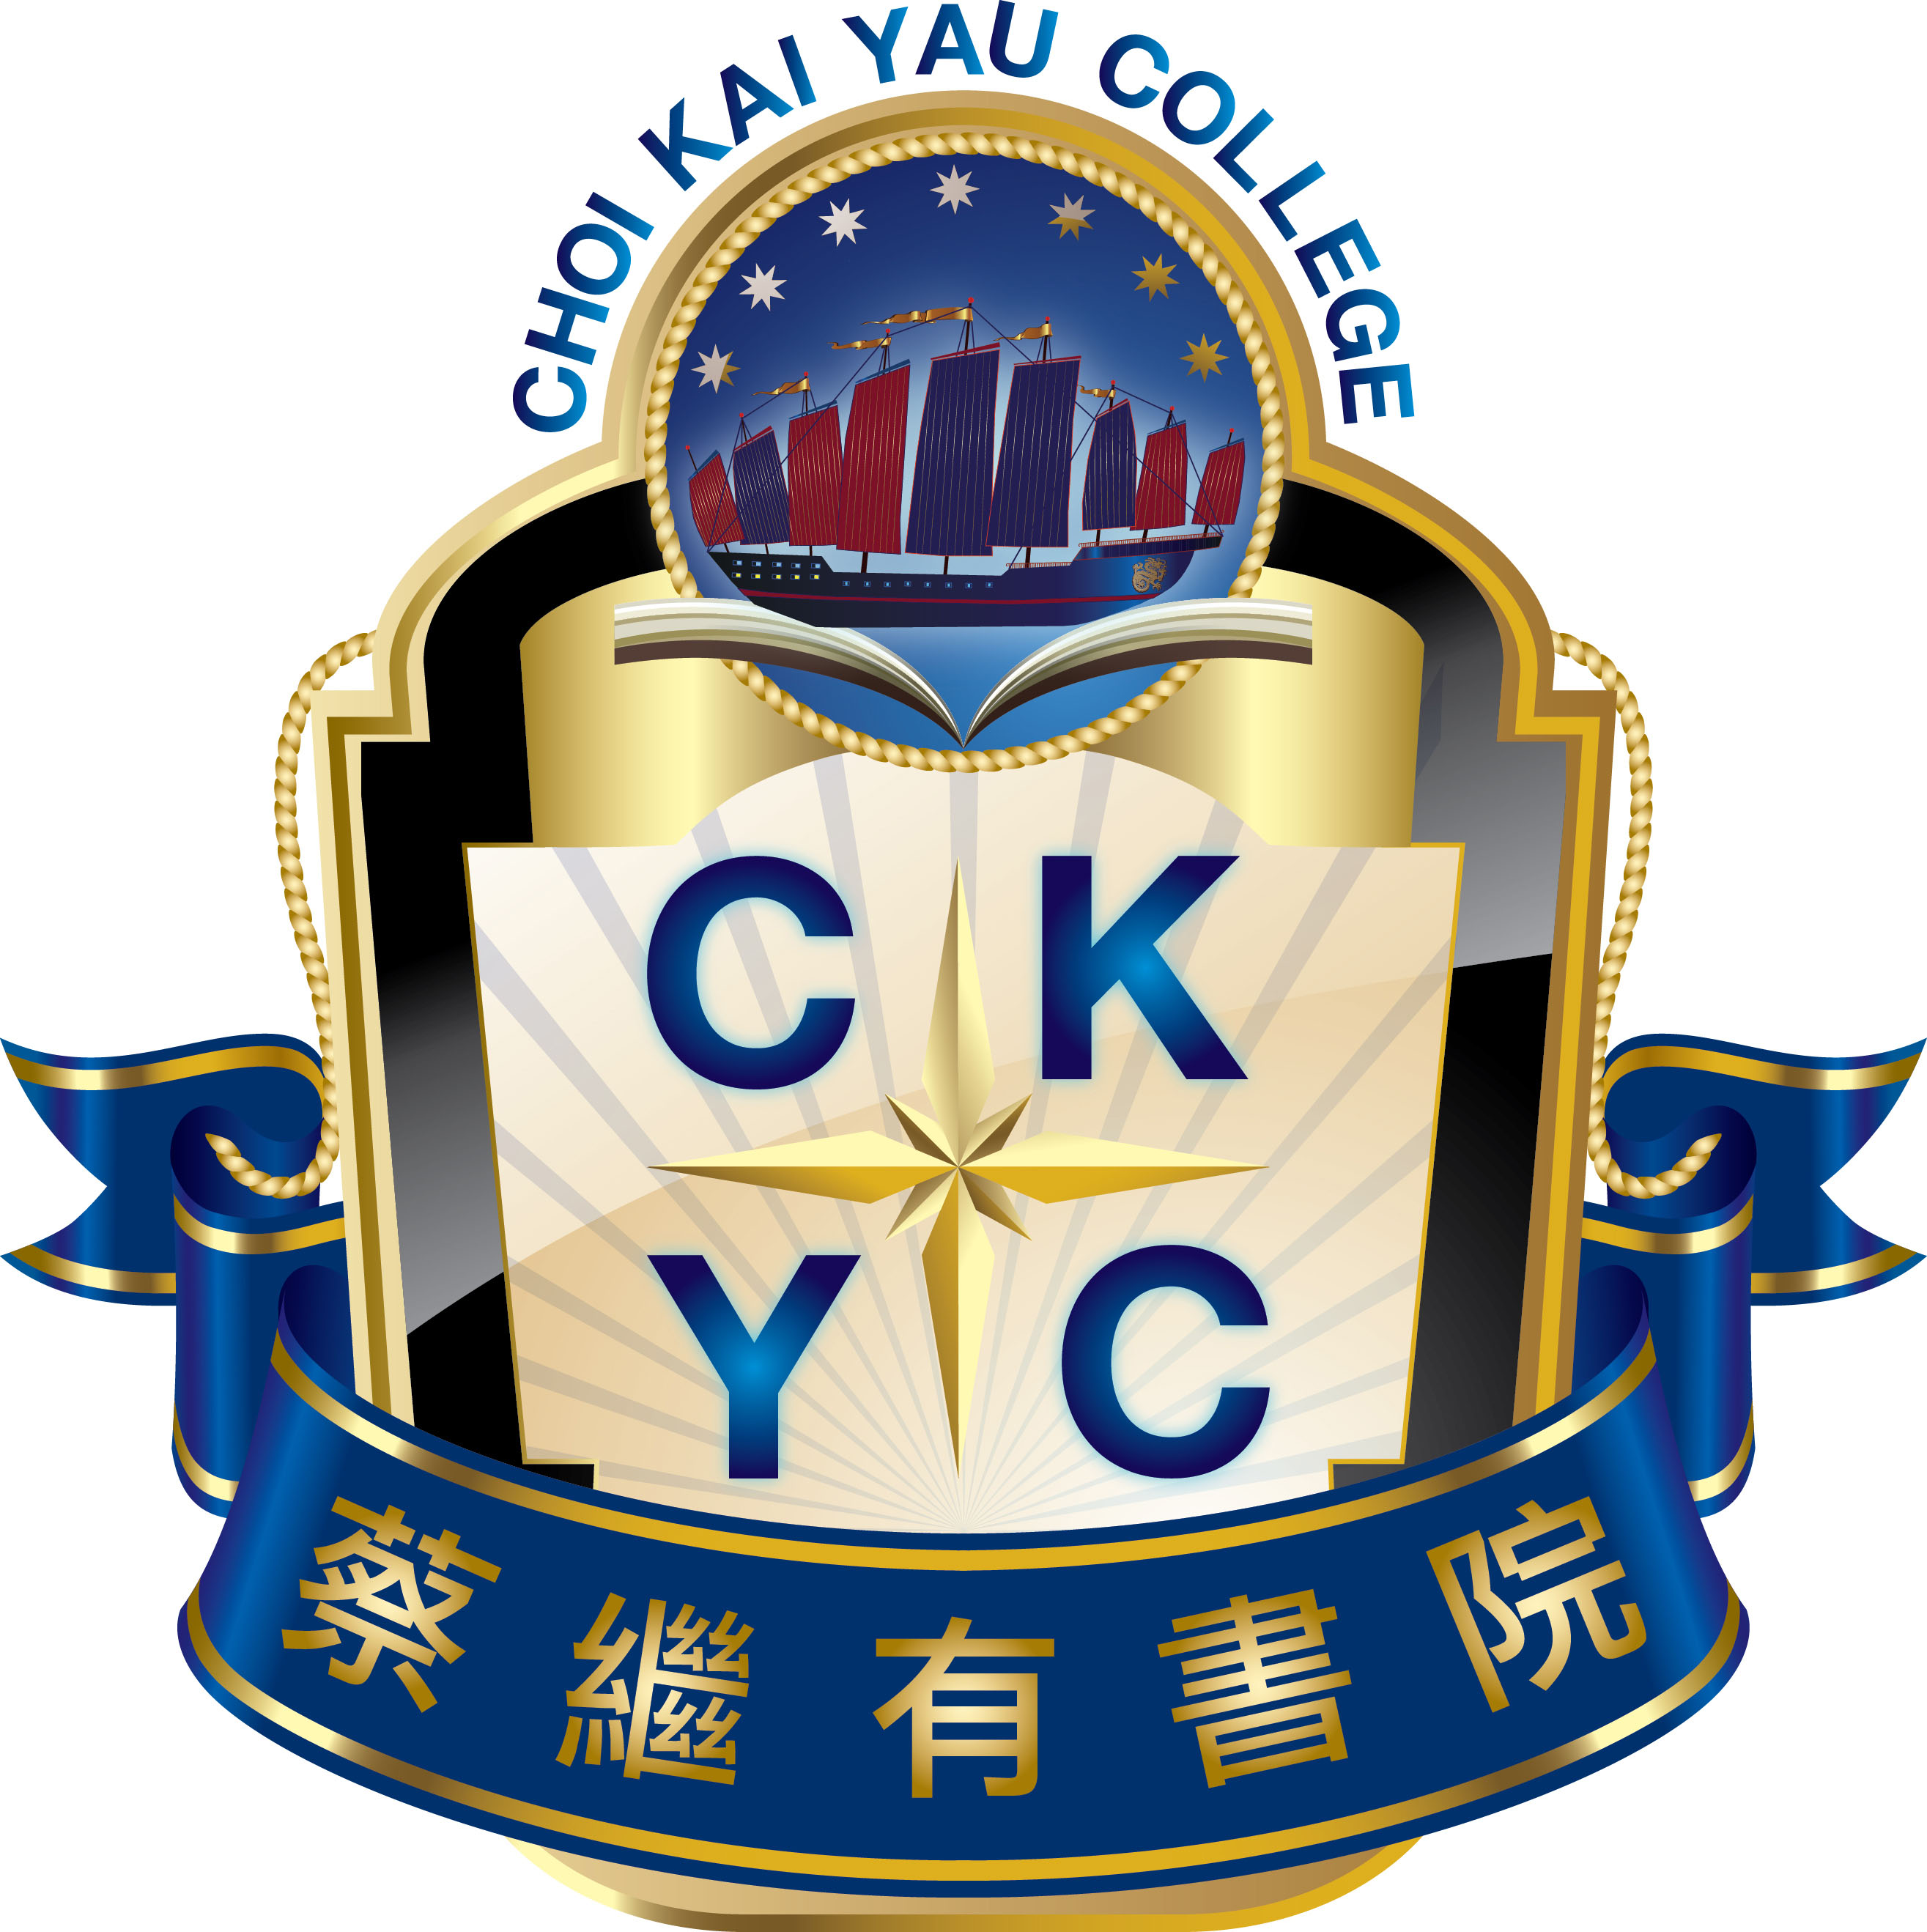 CKYC logo.jpg